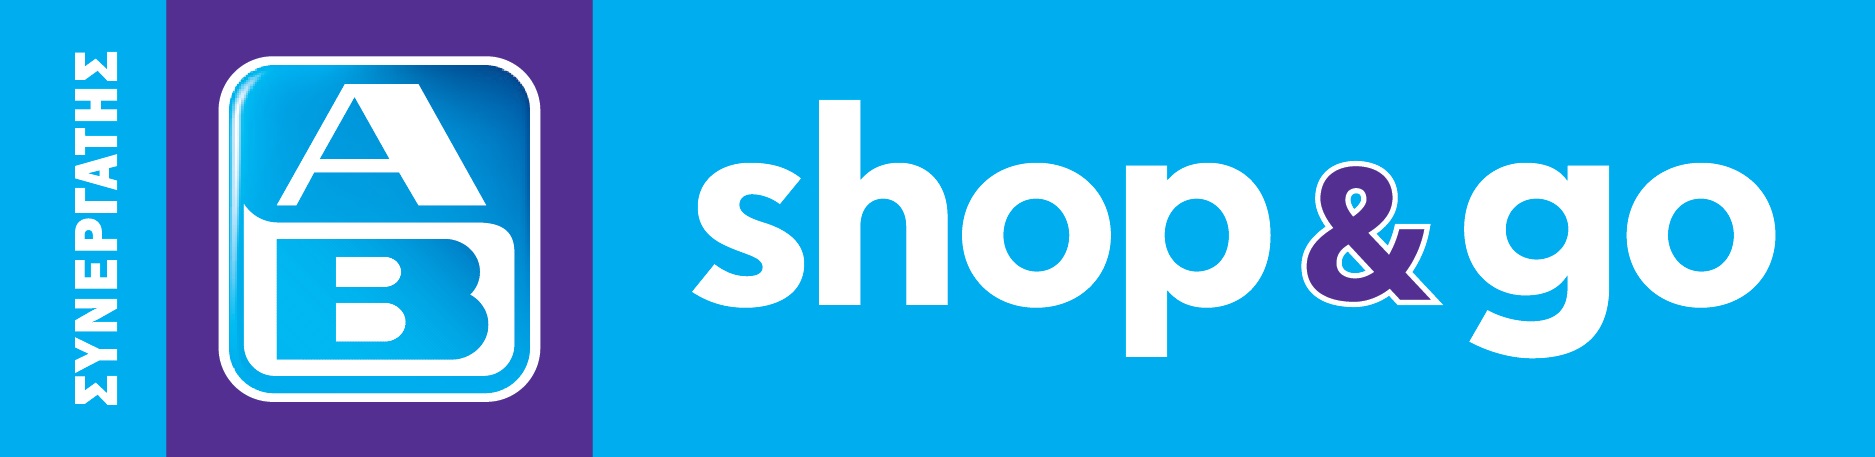 ab-shop-and-go-logo-franchise